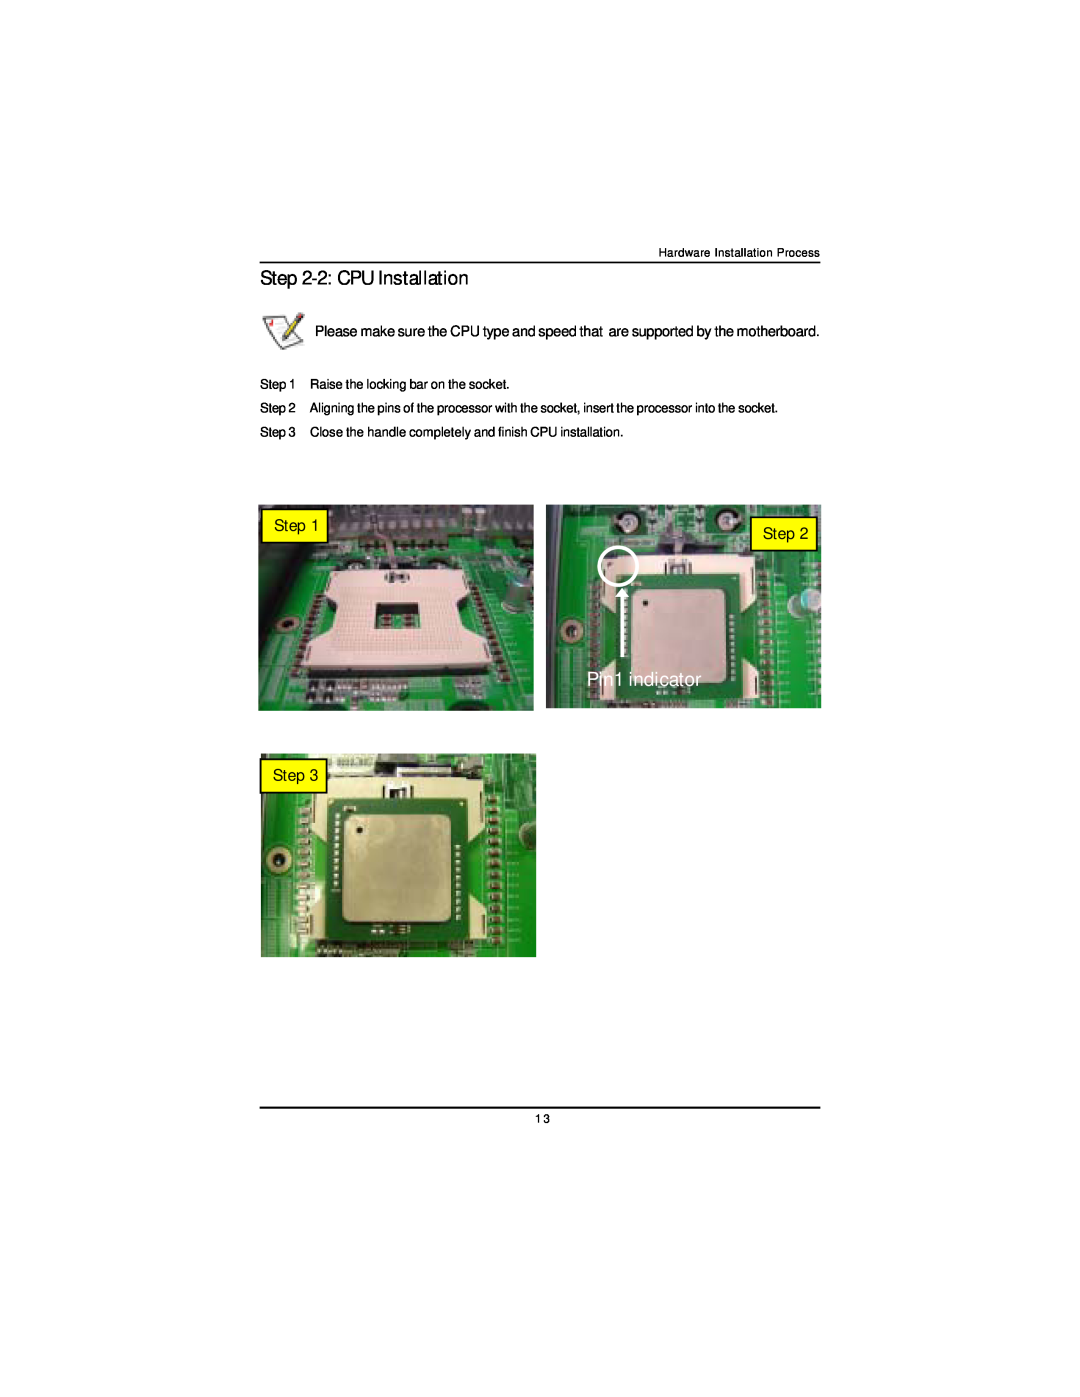 Intel GS-SR195V manual 2 CPU Installation, Pin1 indicator, Step 